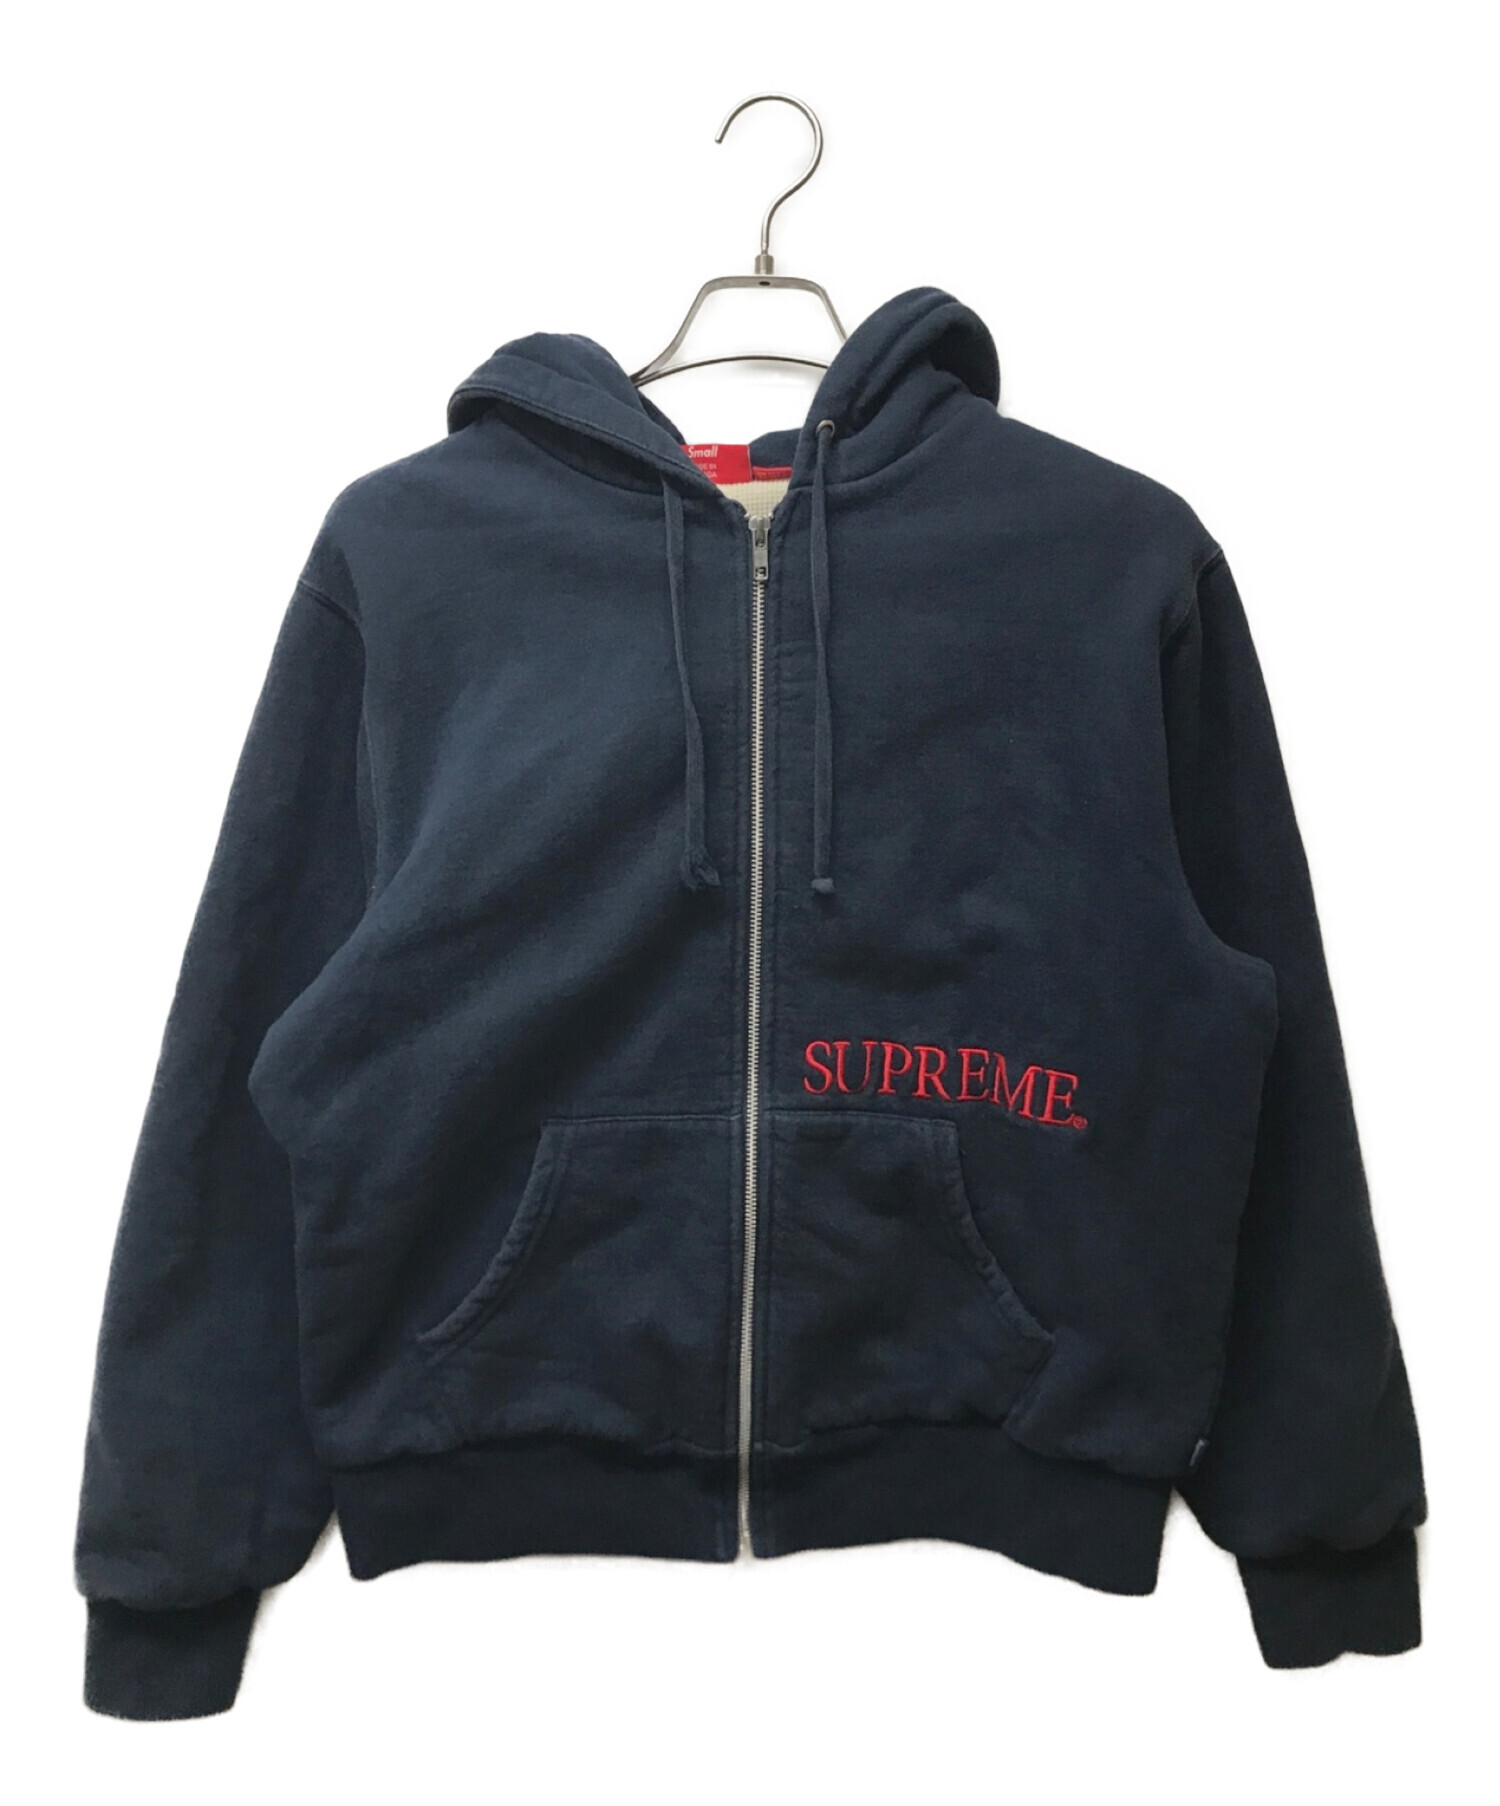 Supreme (シュプリーム) Thermal Zip Up Hooded Sweatshirt ネイビー サイズ:S